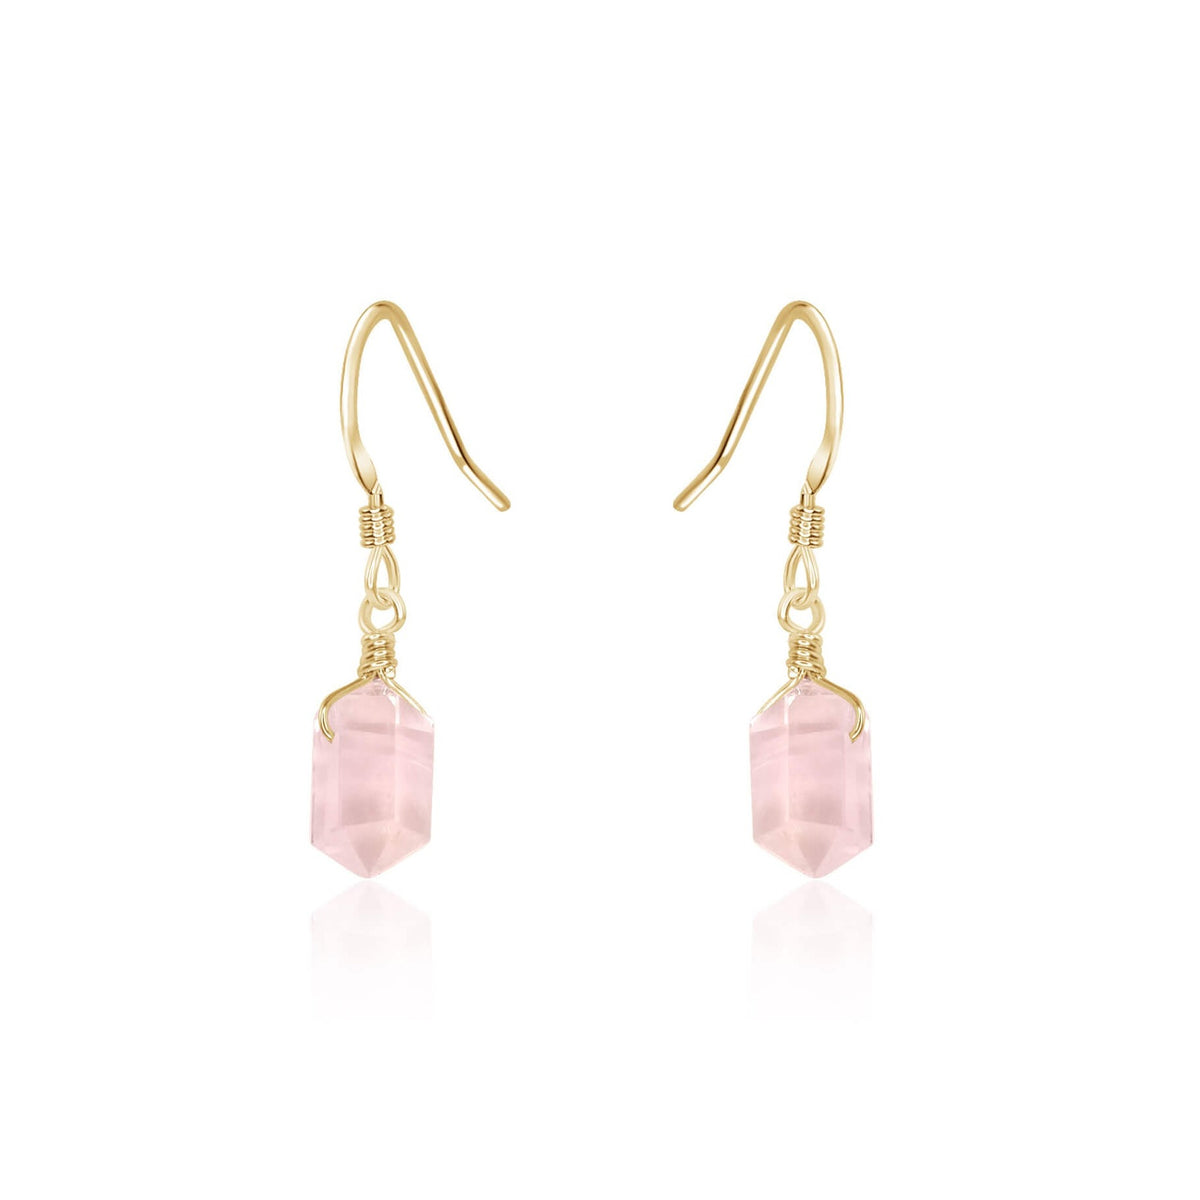 Double Terminated Crystal Dangle Drop Earrings - 14K Gold Fill - Luna Tide Handmade Jewellery